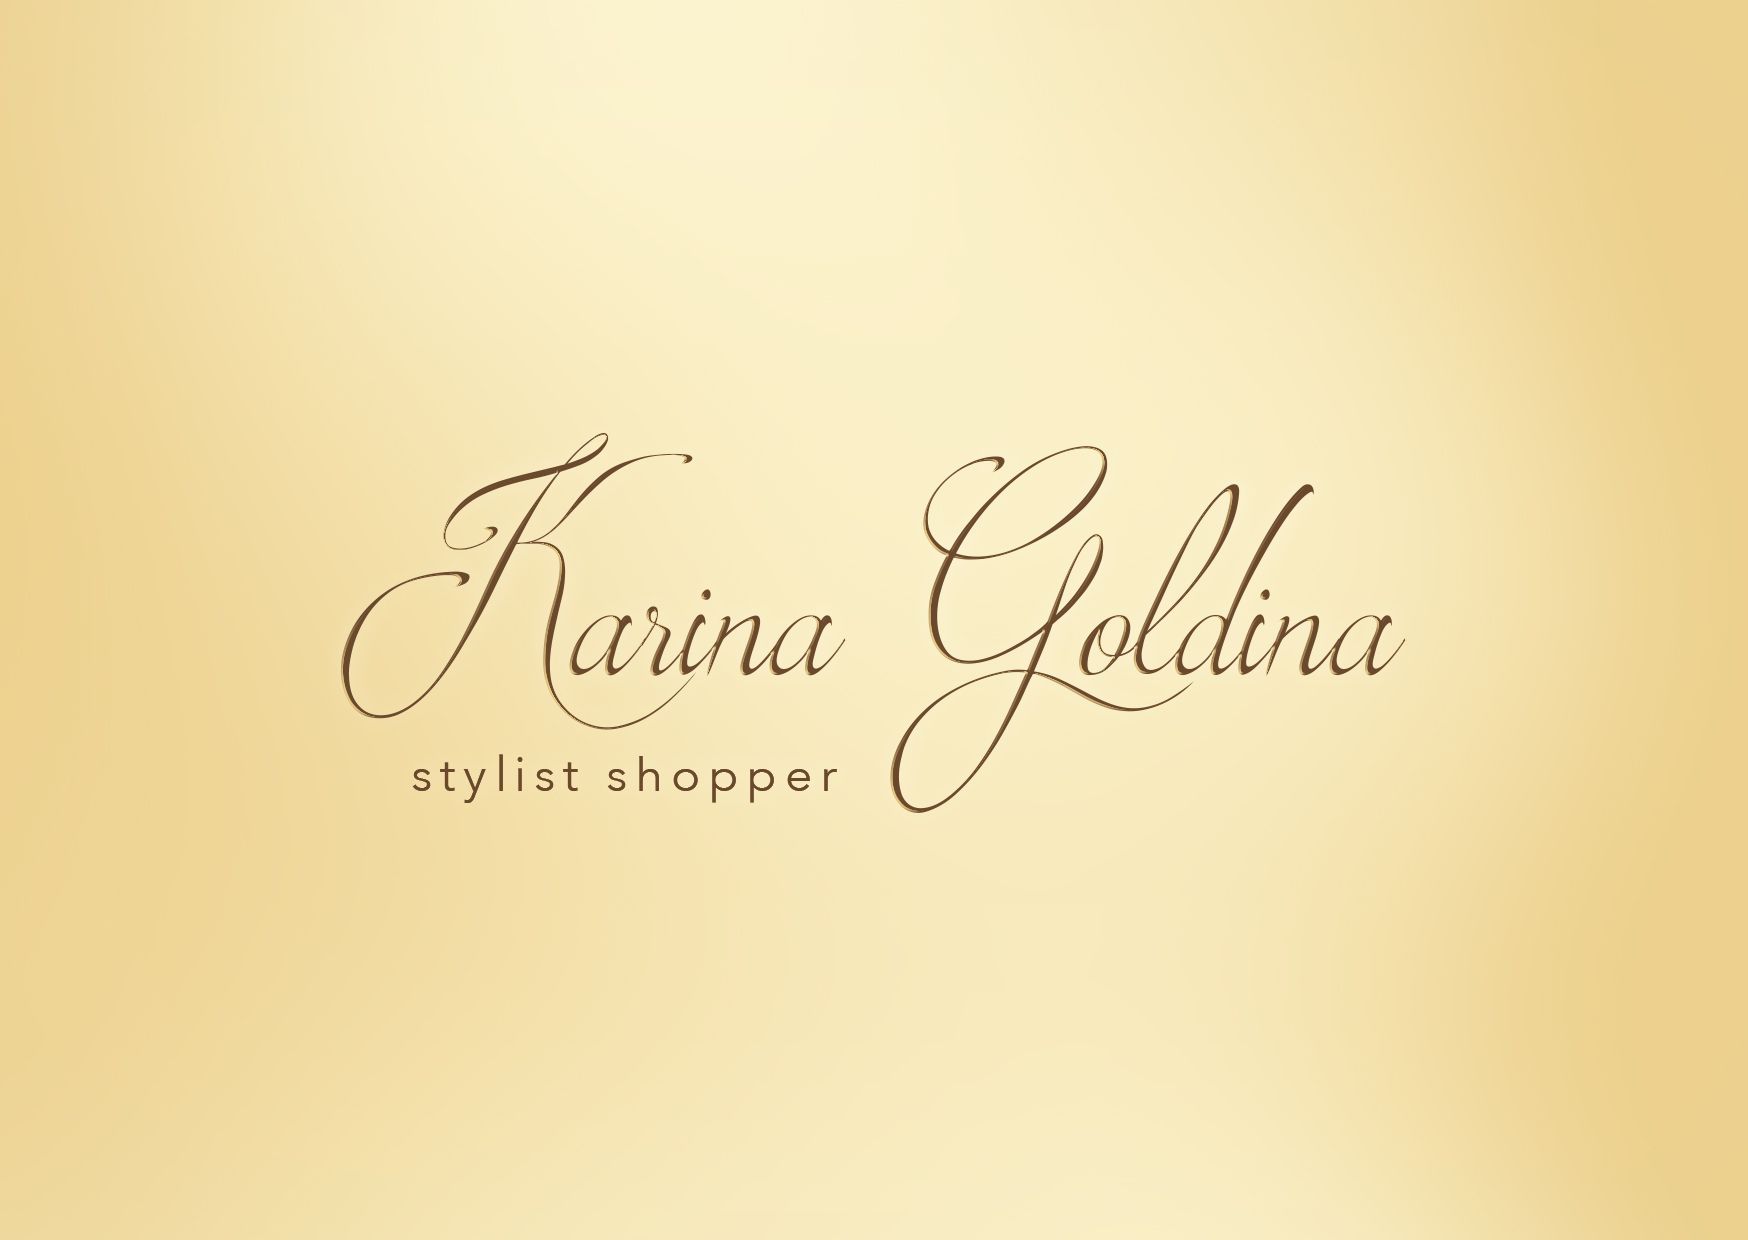 Логотип для Карина Голдина, стилист-шоппер - дизайнер PautovRoman